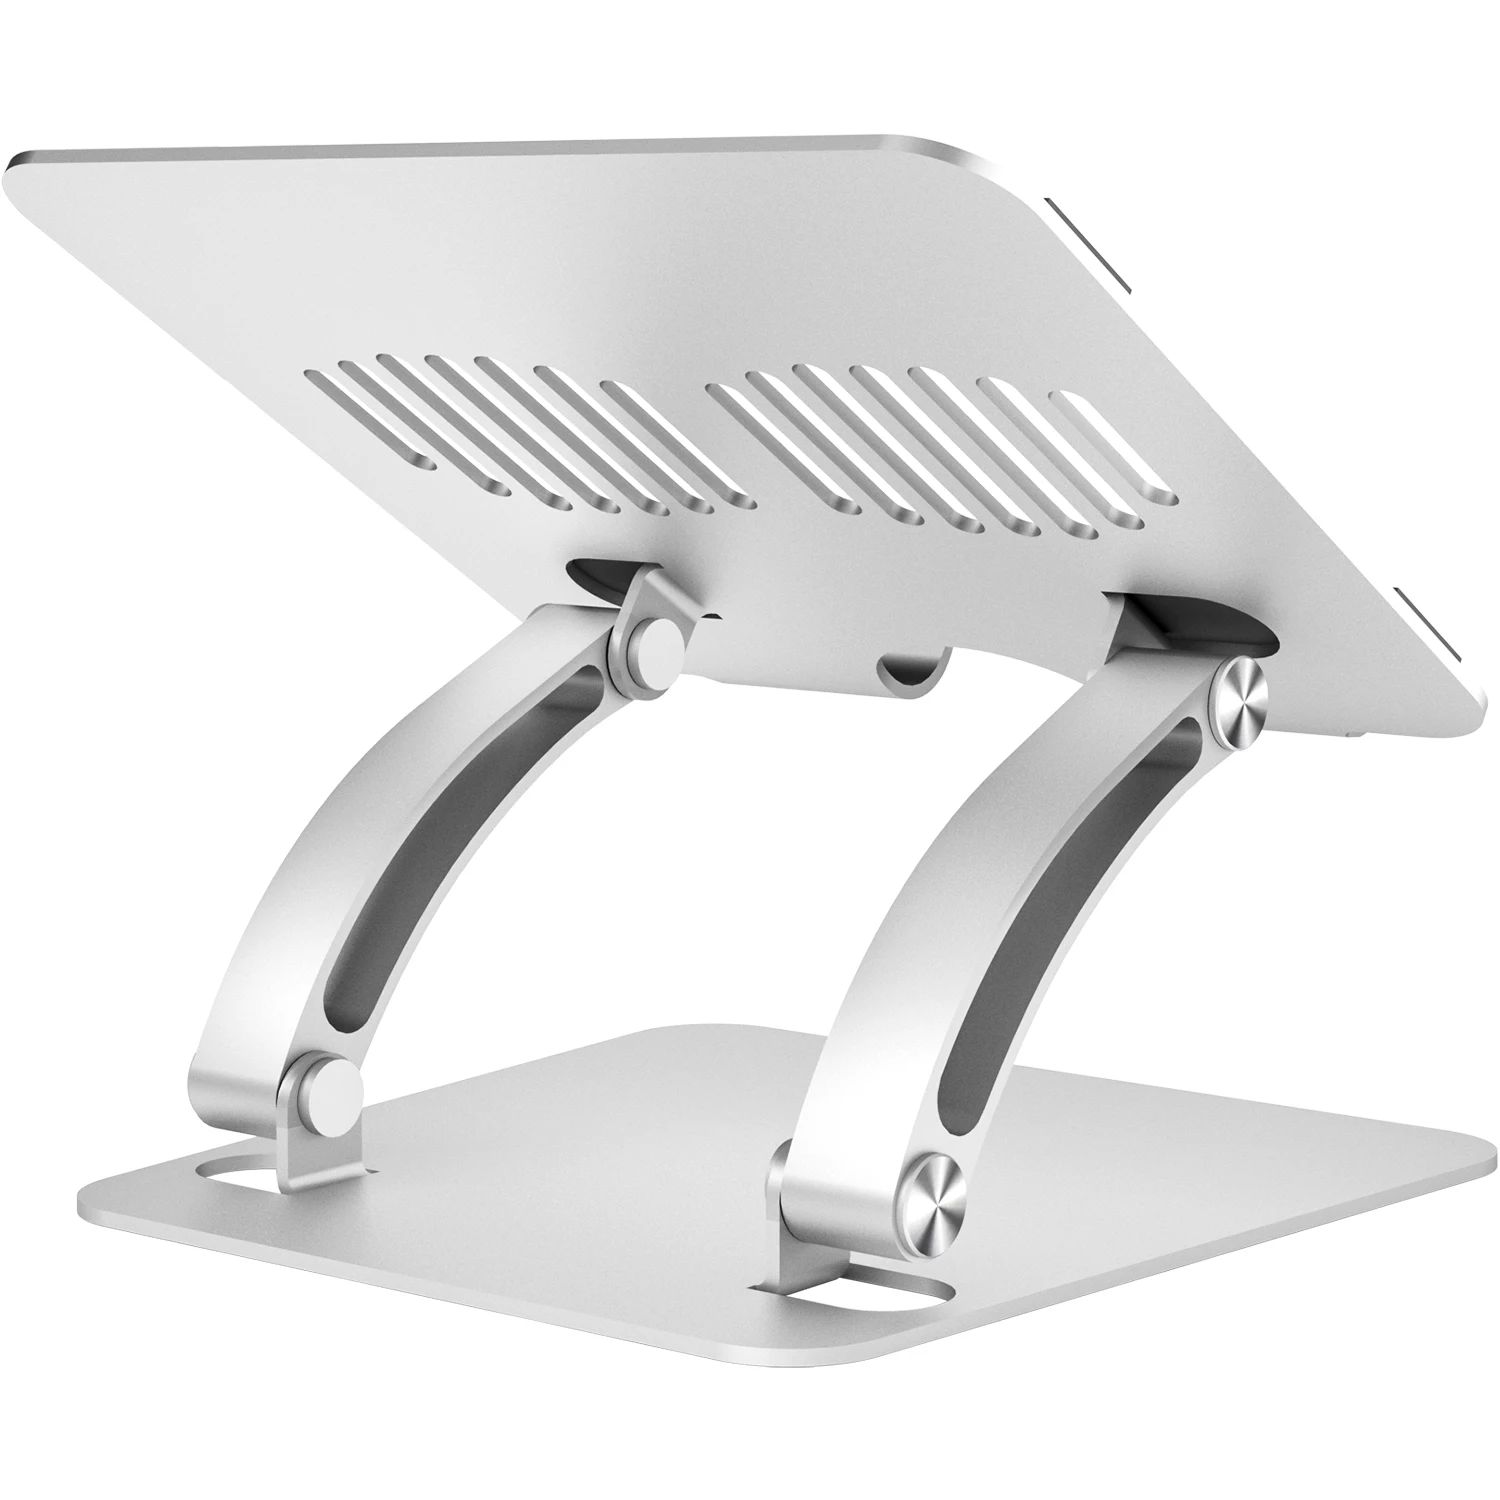 

Ergonomic Flexible Folding Height Adjustable Aluminum Foldable Portable Adjustment Desktop Laptop Notebook Holder Riser Stand